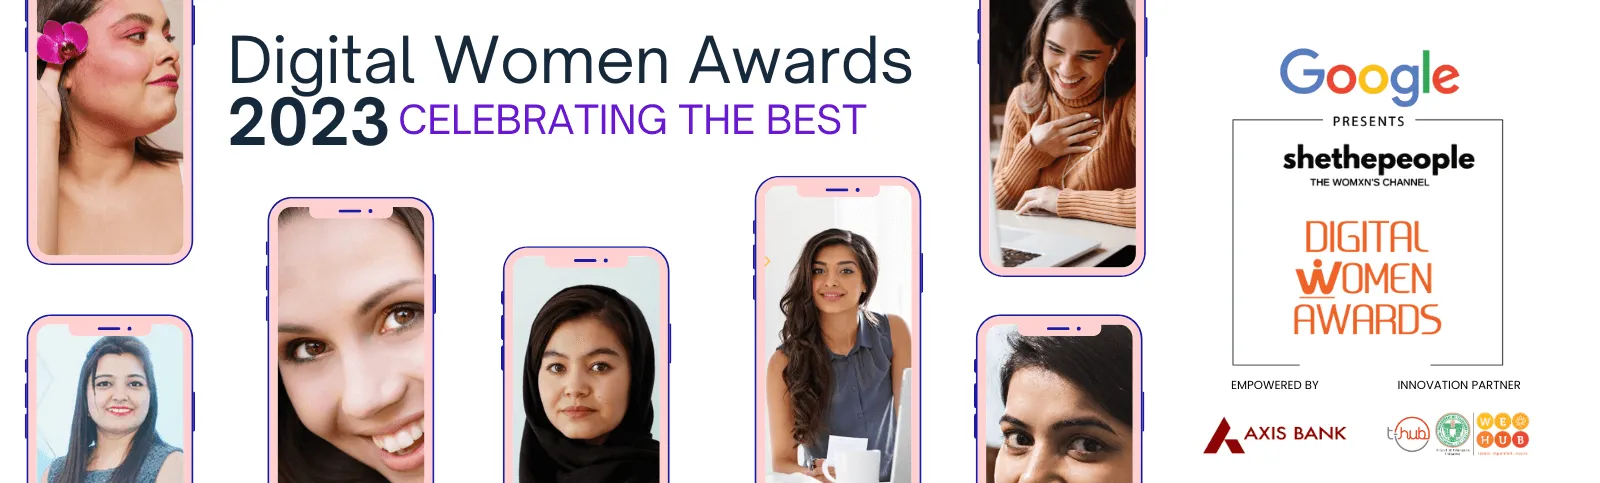 digital women awards